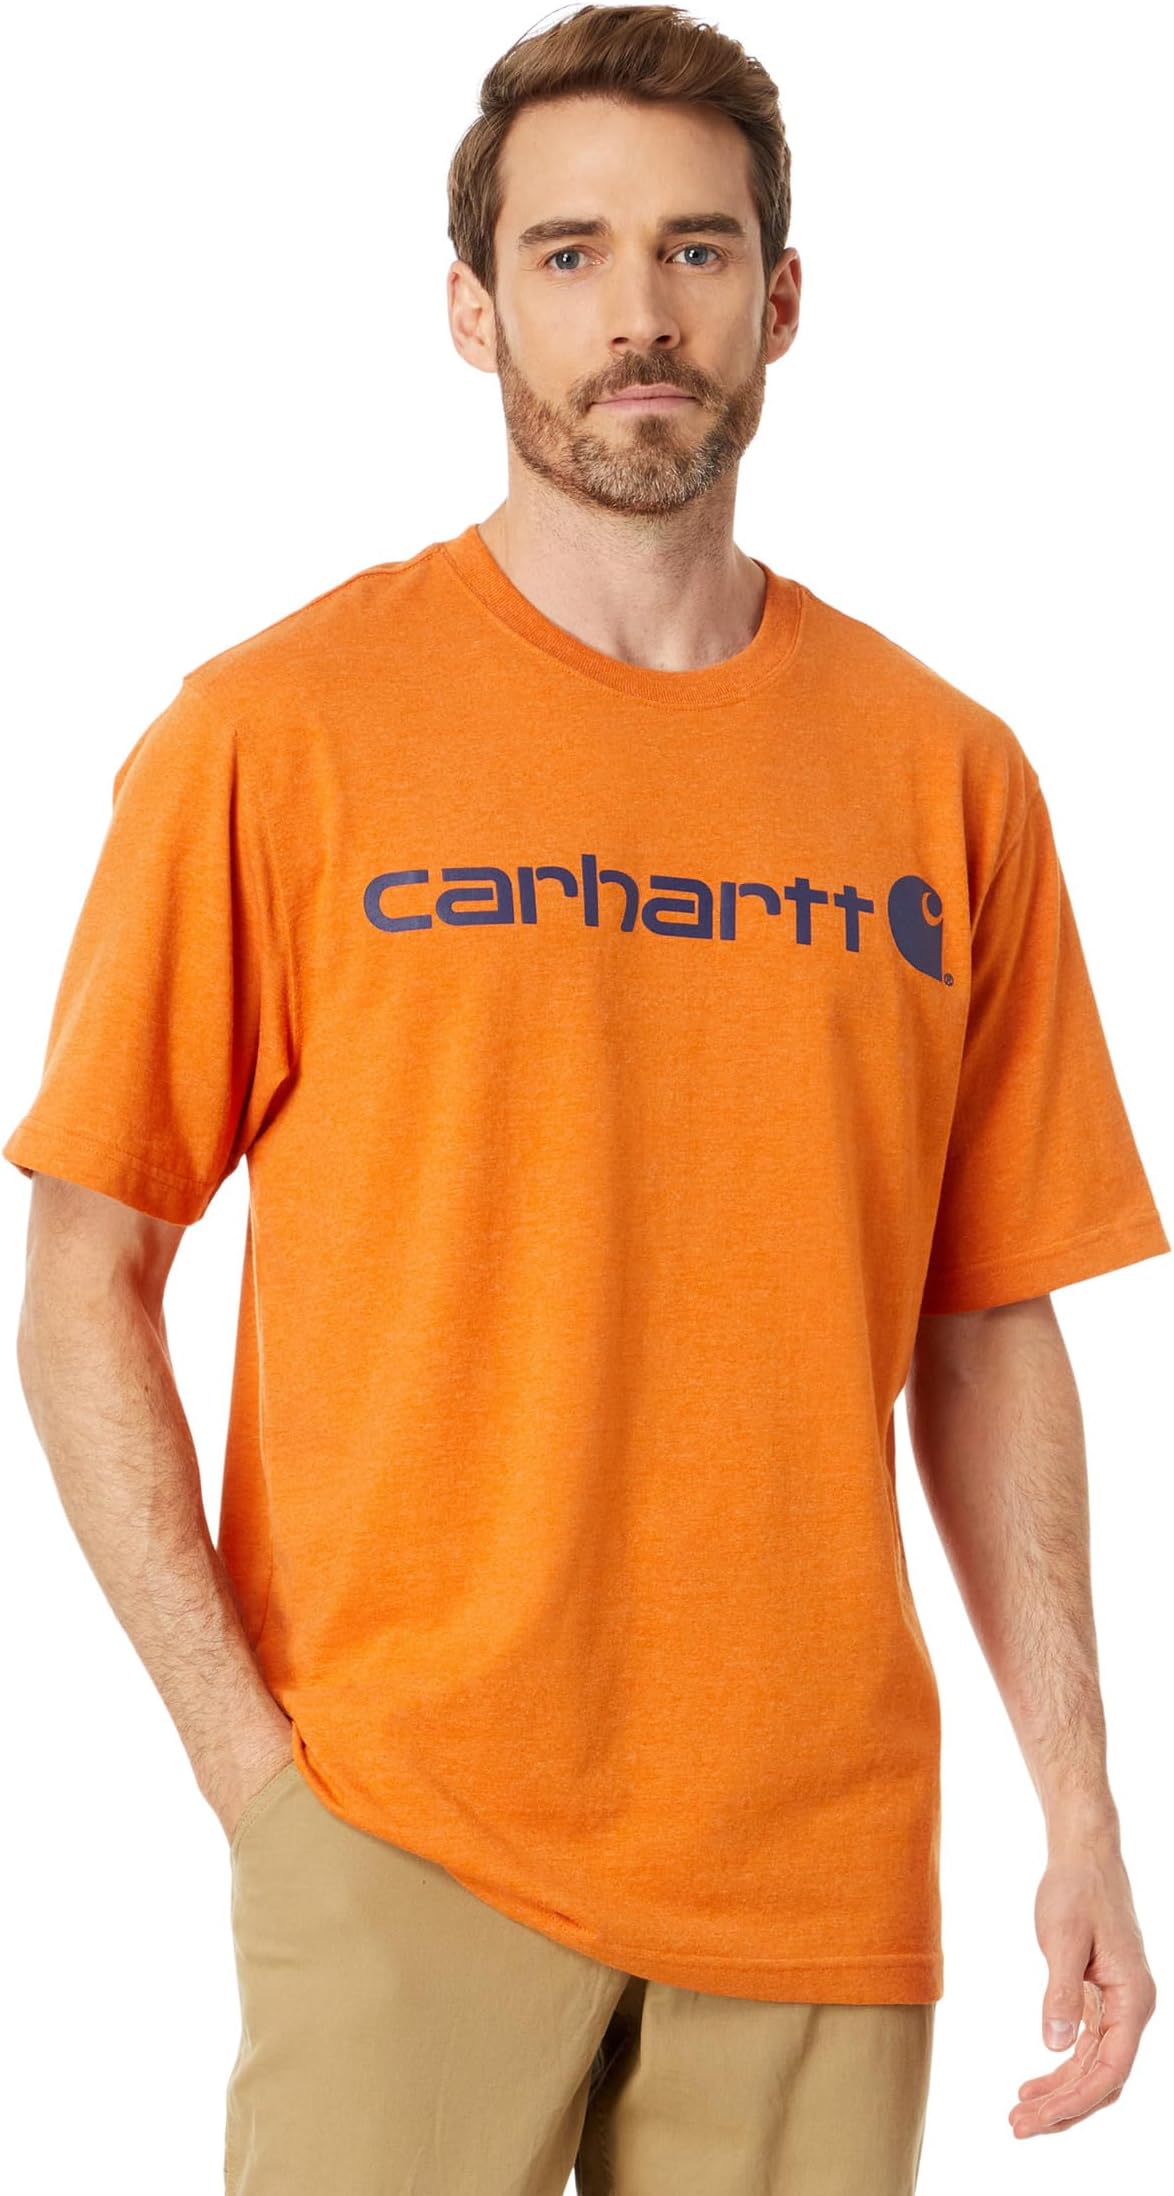 Футболка с фирменным логотипом (S/S) Carhartt, цвет Marmalade Heather футболка с фирменным логотипом s s carhartt цвет marmalade heather